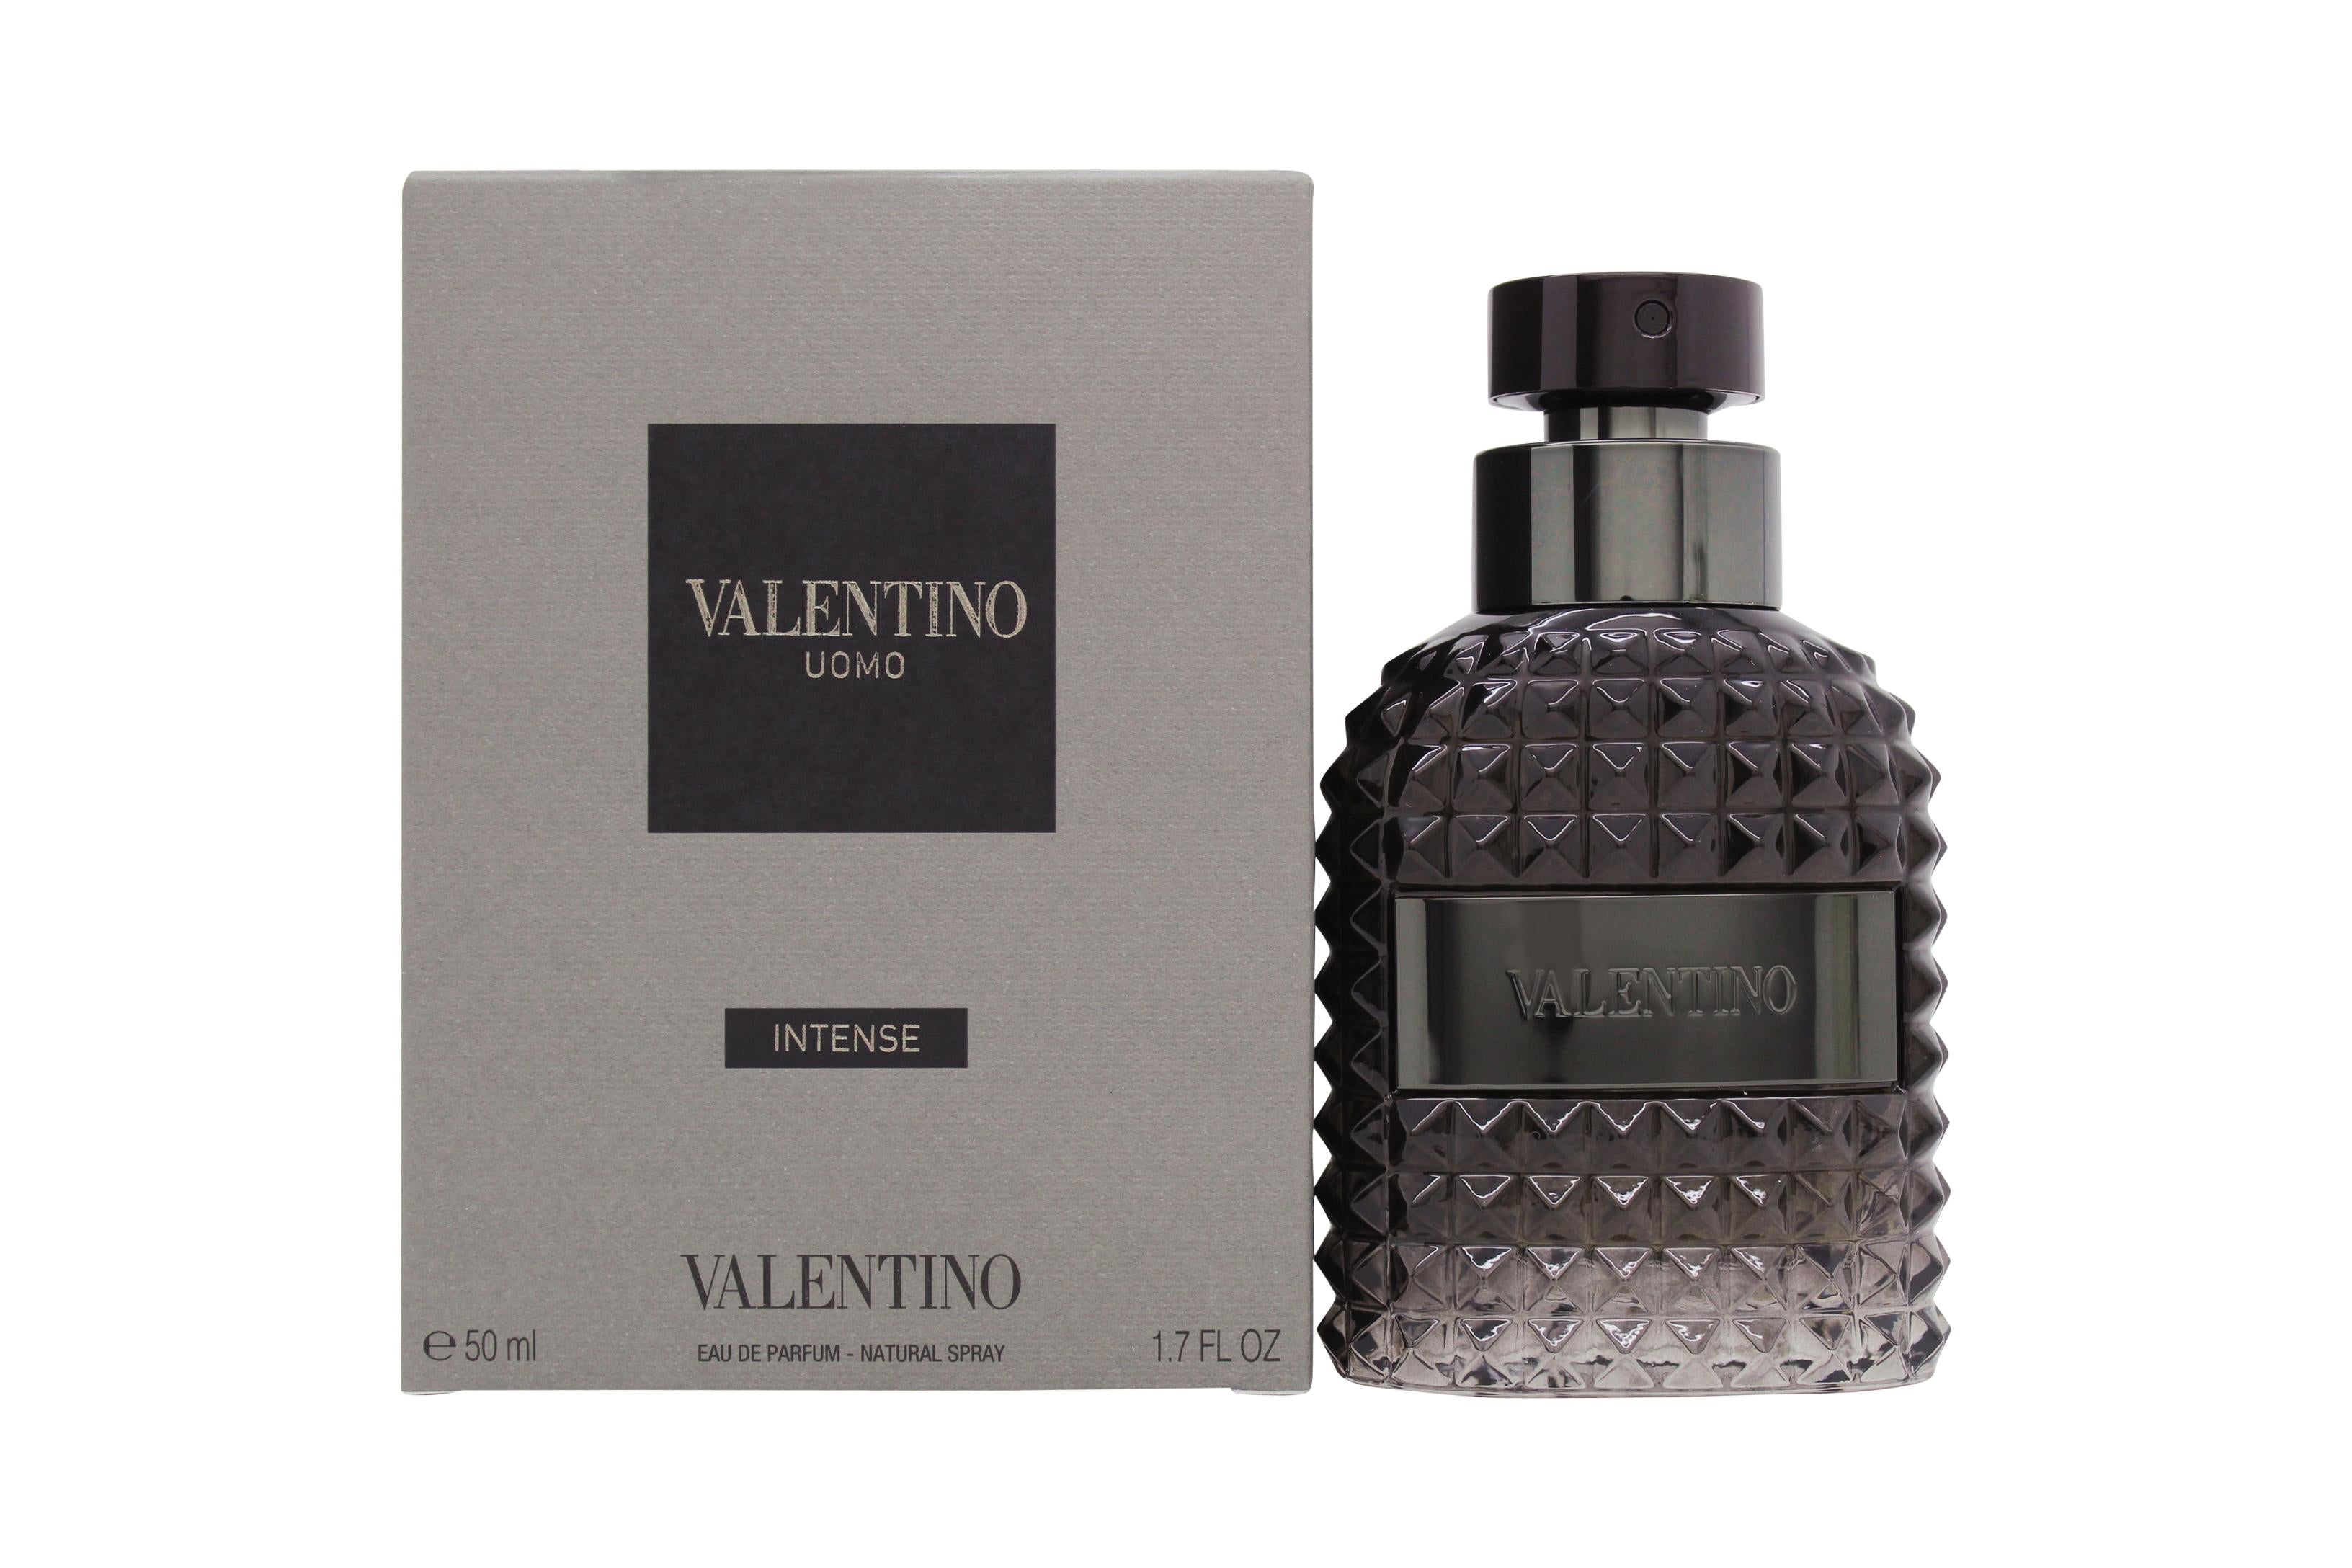 View Valentino Uomo Intense Eau de Parfum 50ml Spray information